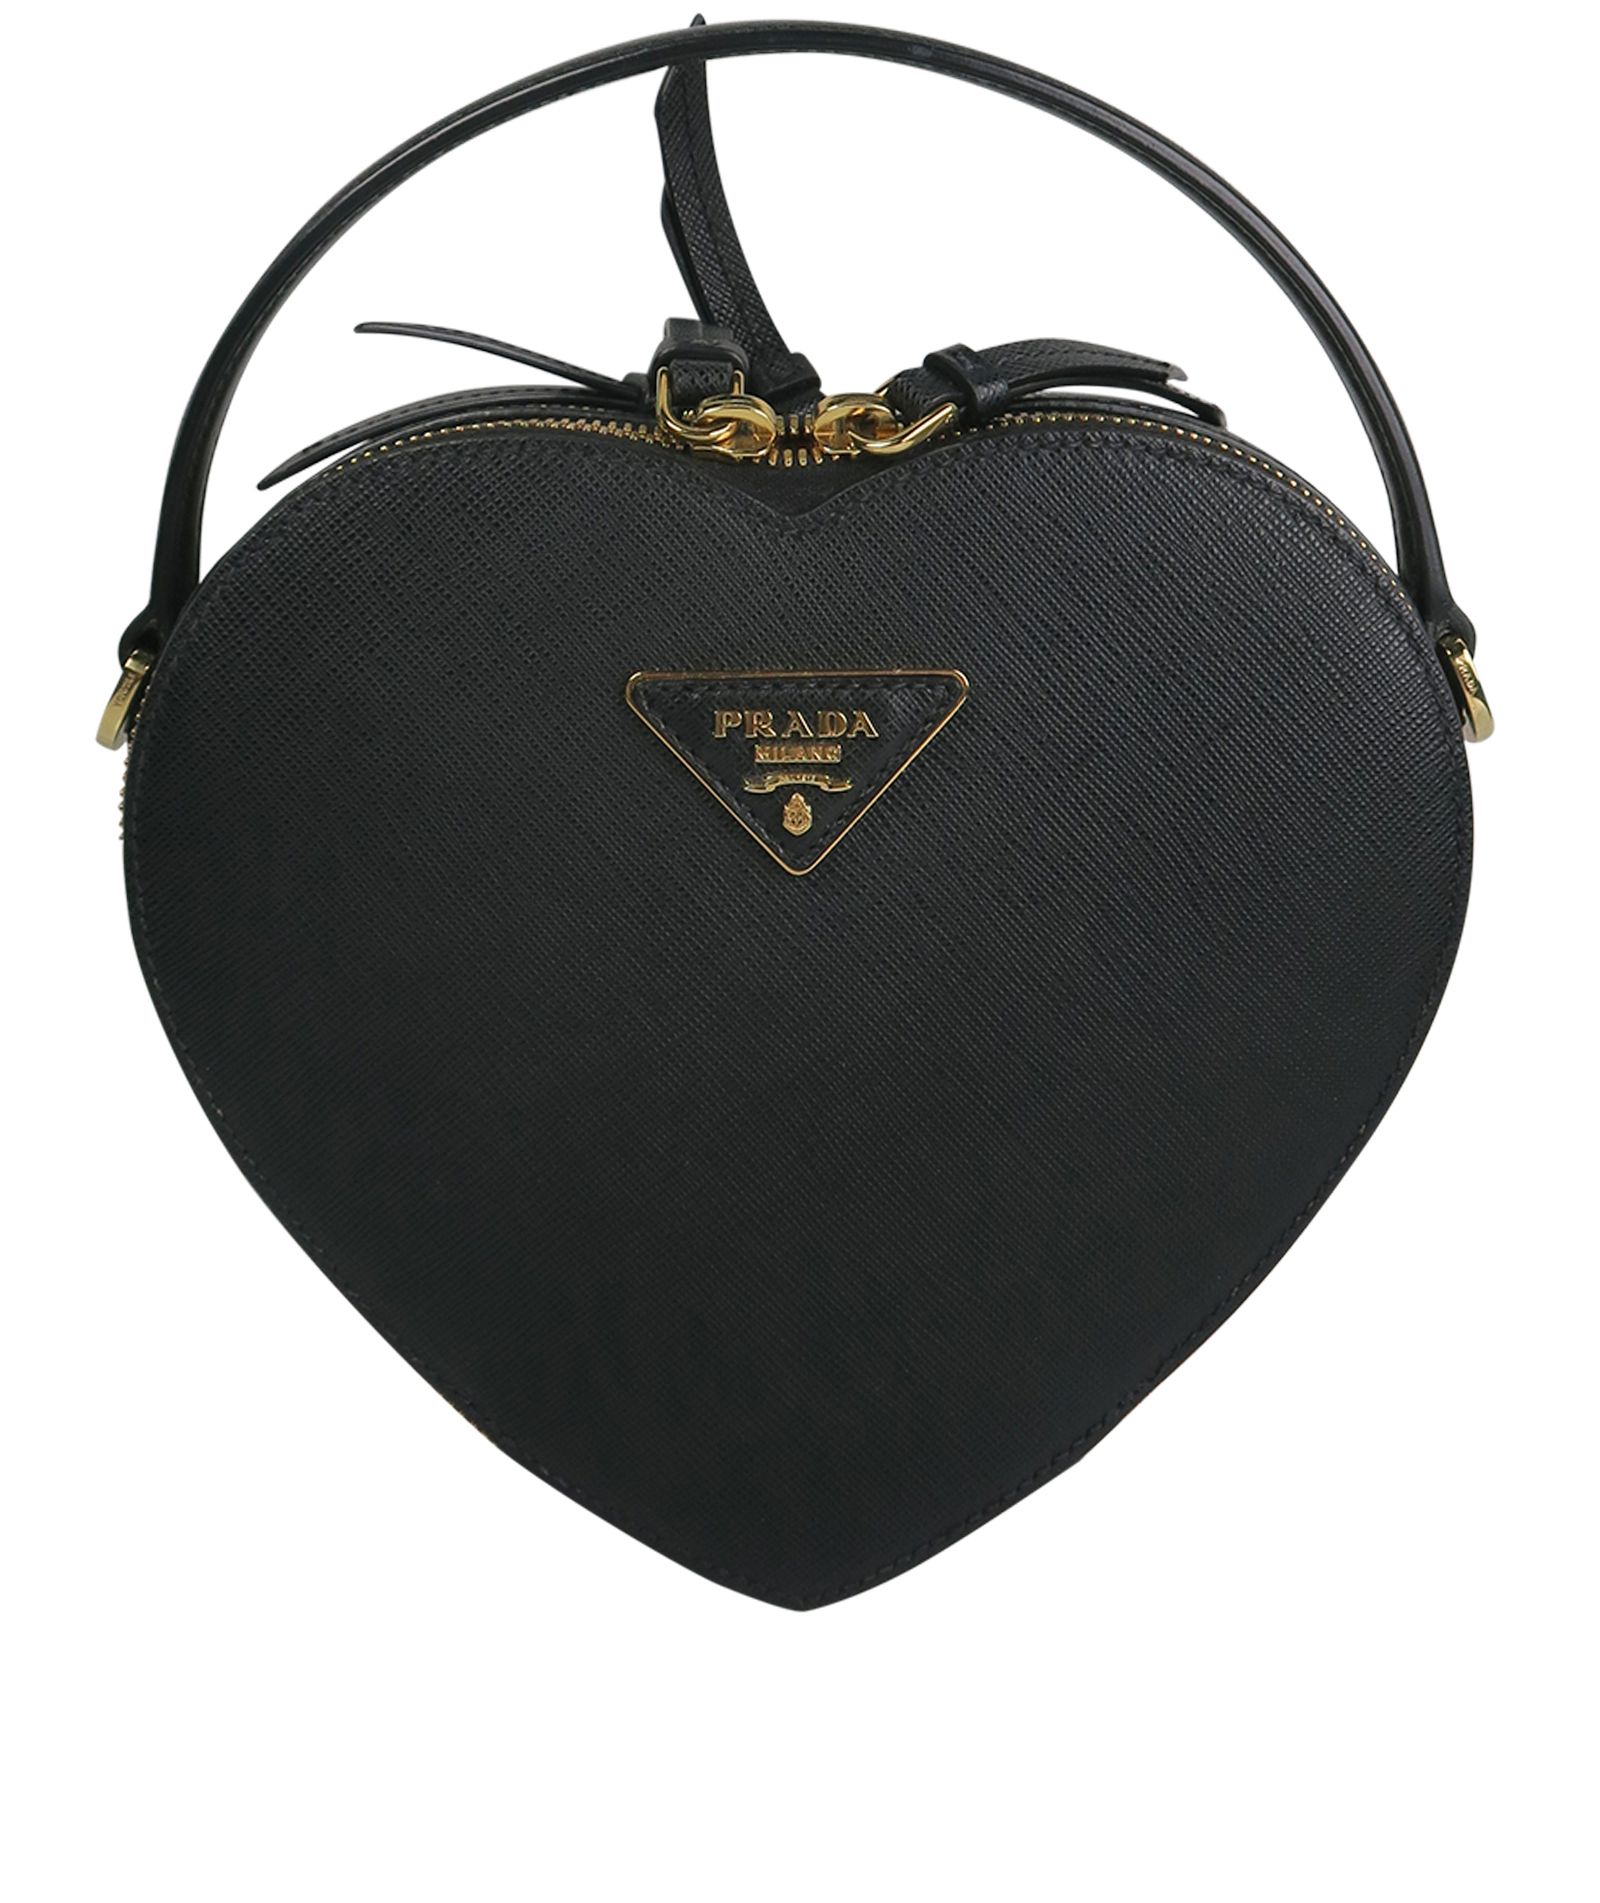 Prada Odette Heart Bag